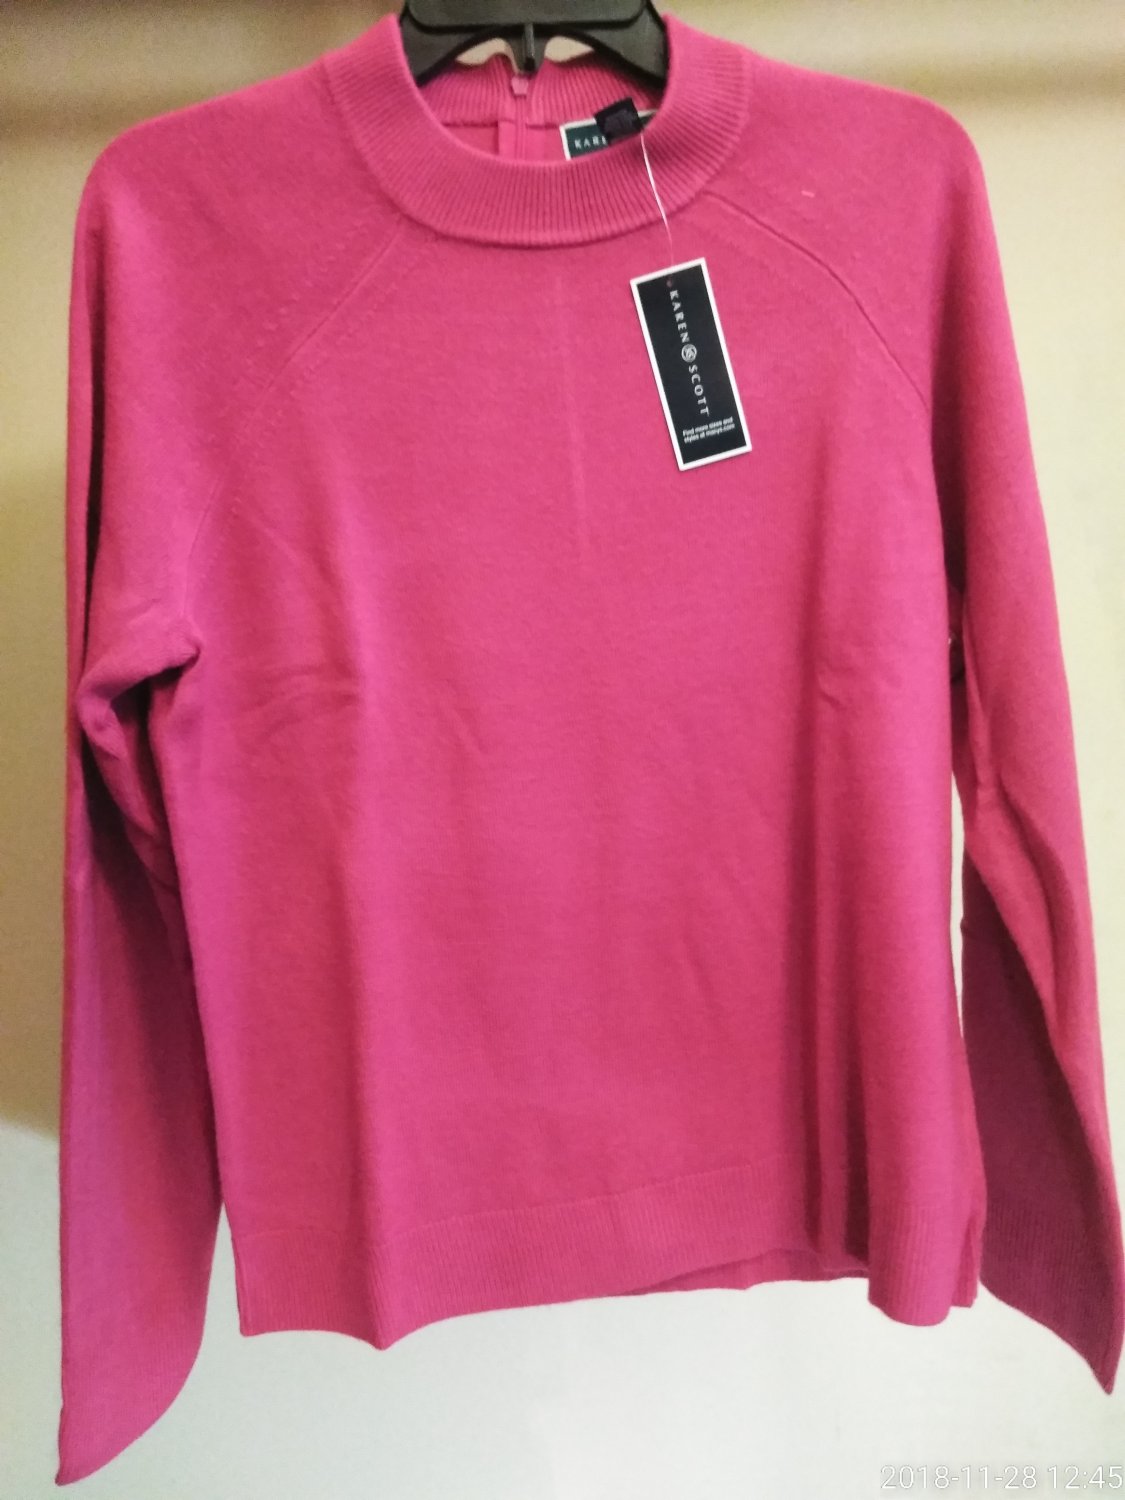 Karen Scott Women's Crew Neck Raspberry Color Long Sleeve Sweater - M